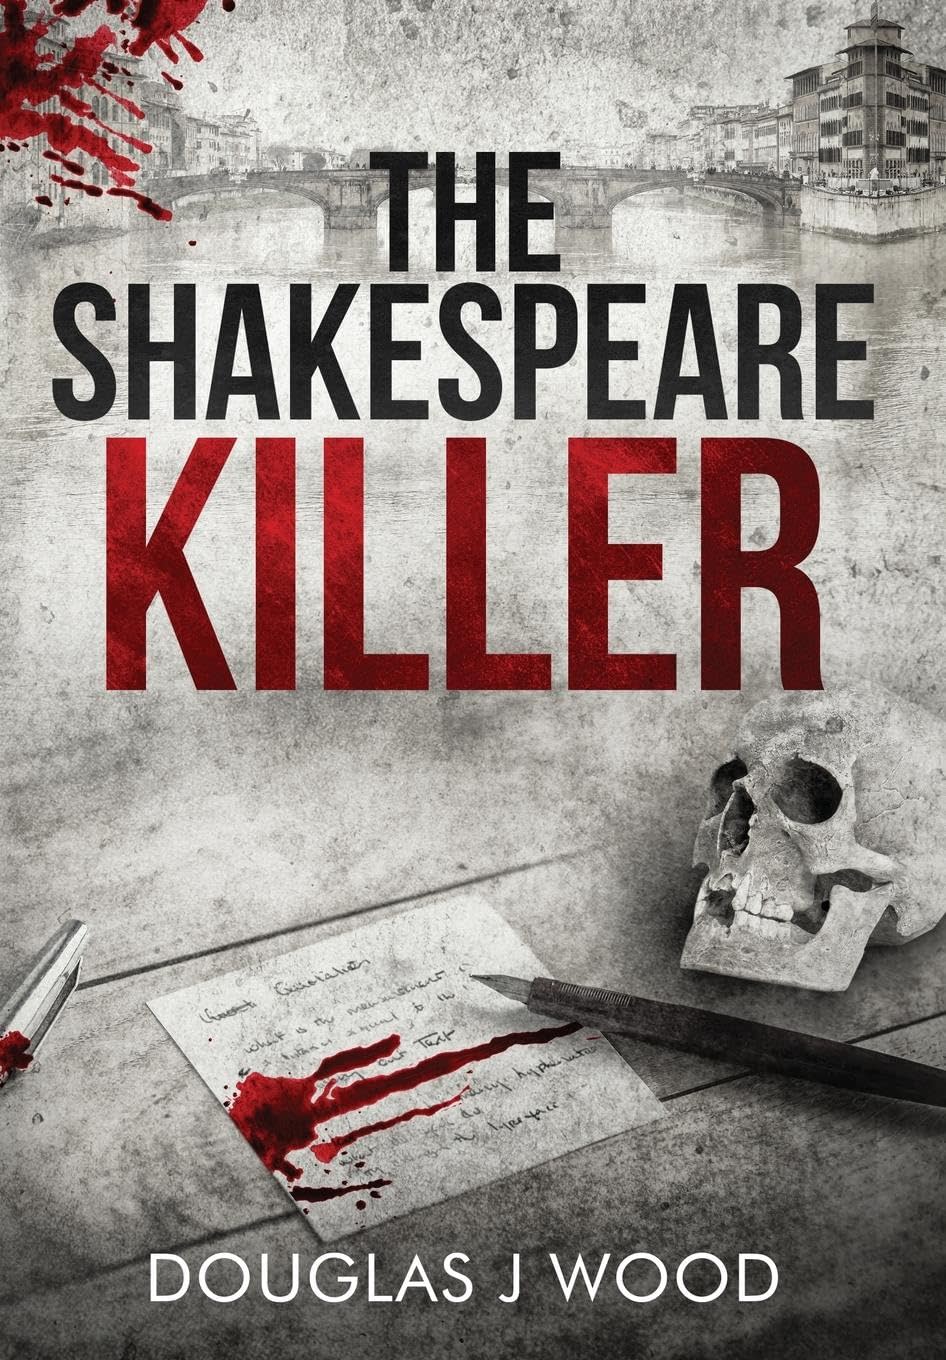 Leland author Douglas J. Wood's latest detective mystery is "The Shakespeare Killer."